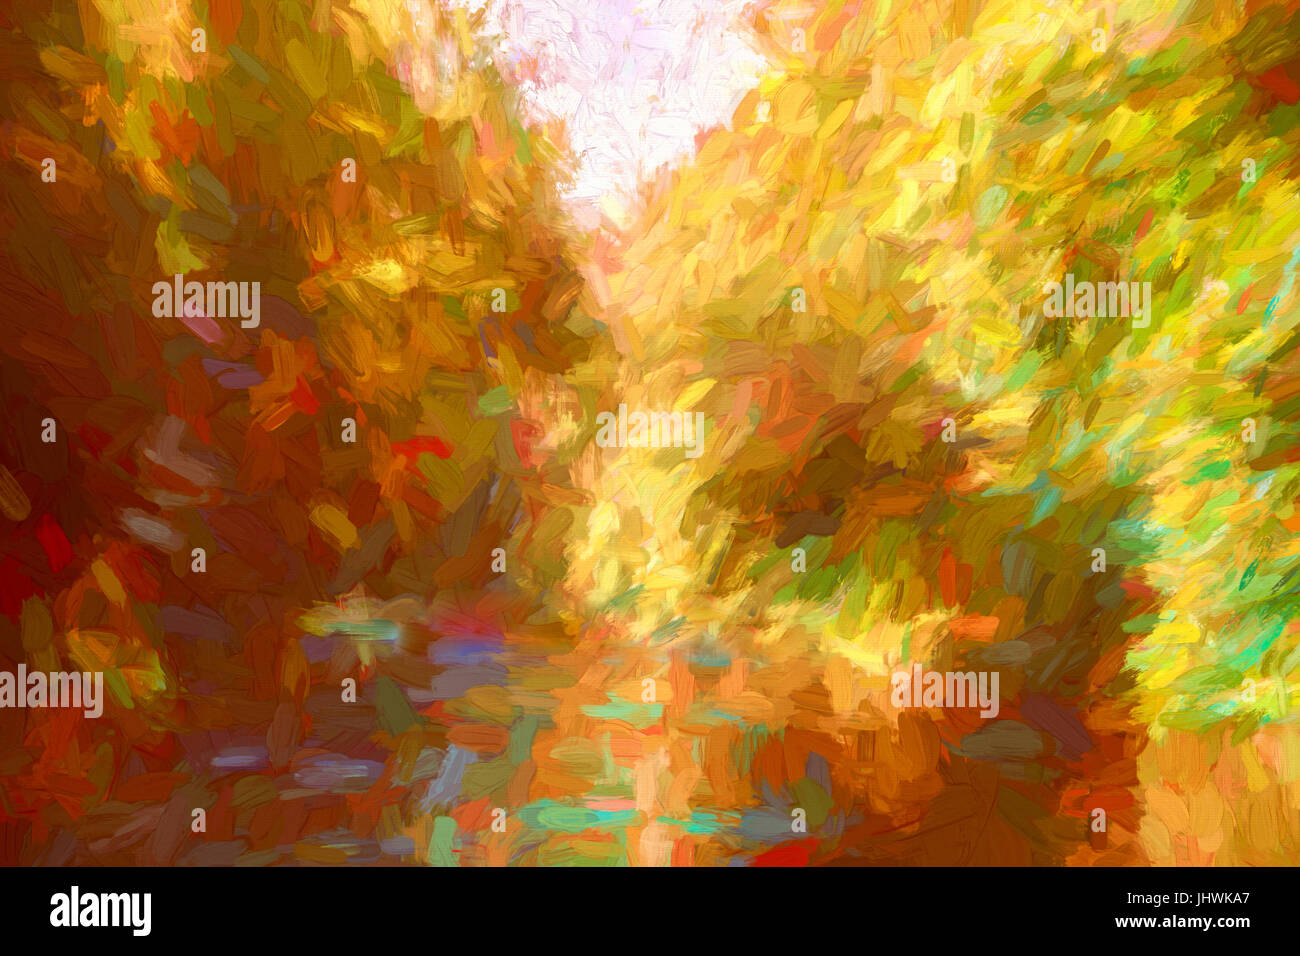 Autumn lake, digital painting illustration in impressionistic style Stock Photo